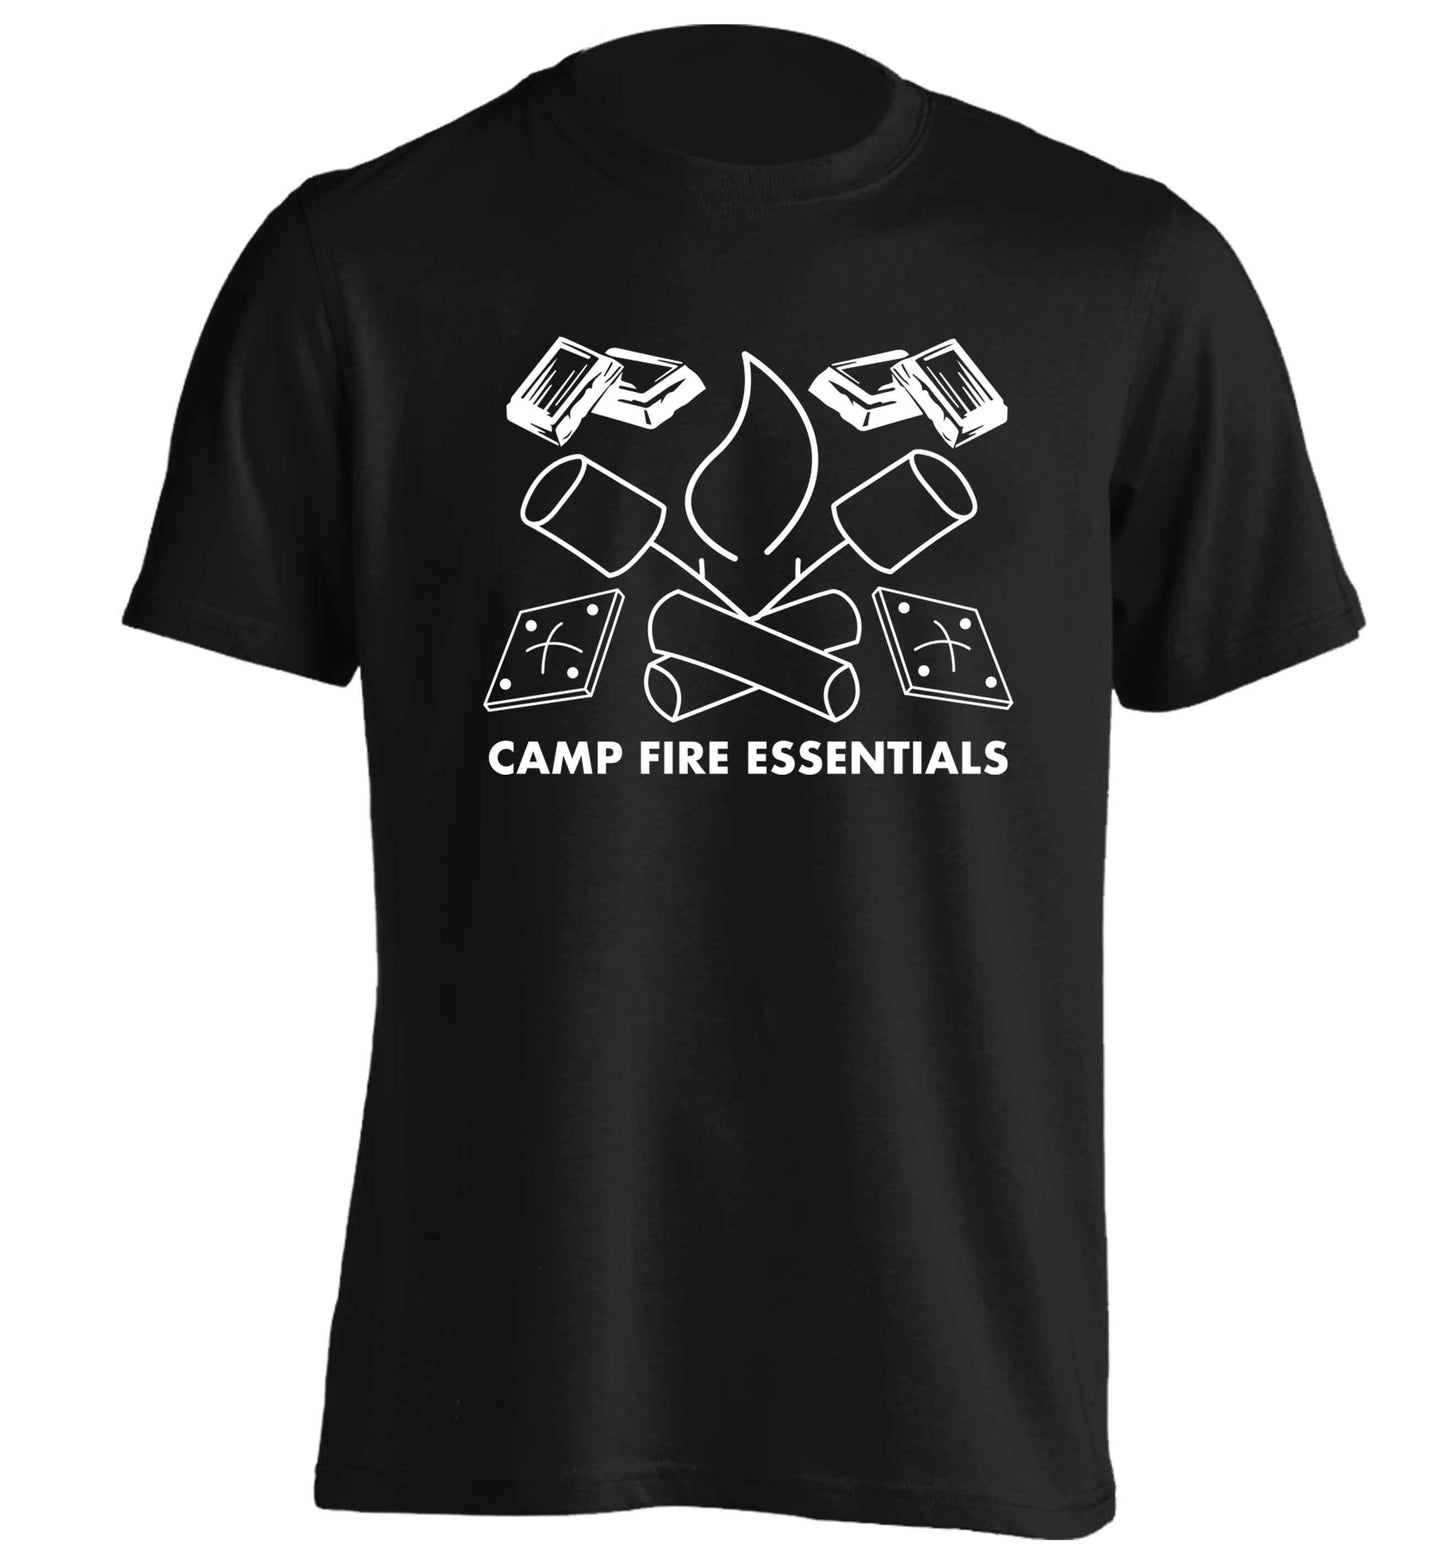 Campfire essentials adults unisex black Tshirt 2XL